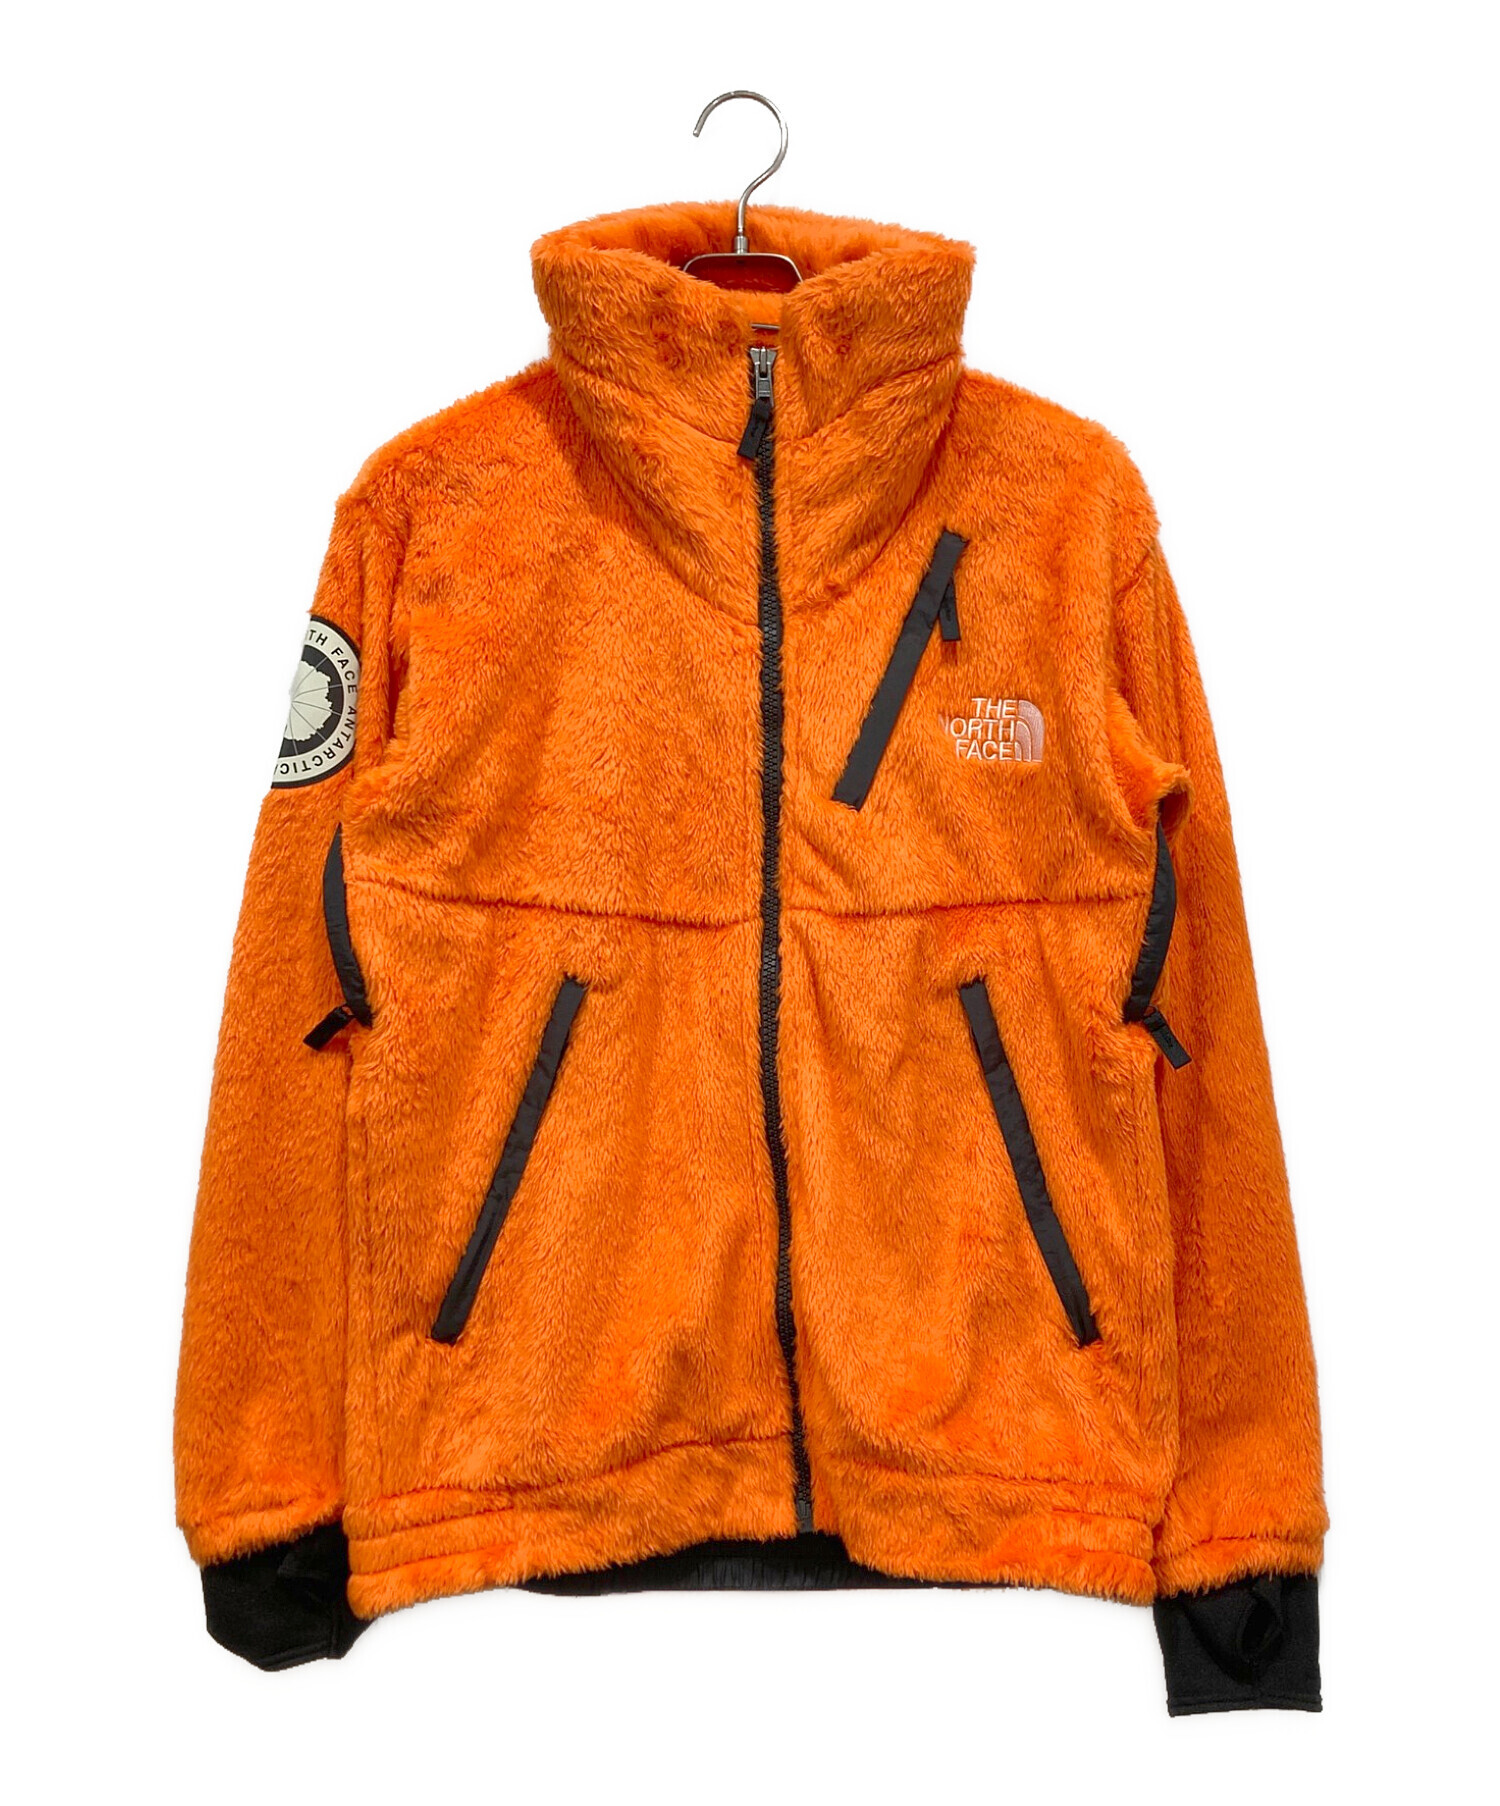 THE NORTH FACE (ザ ノース フェイス) Antarctica Versa Loft Jacket オレンジ サイズ:XL